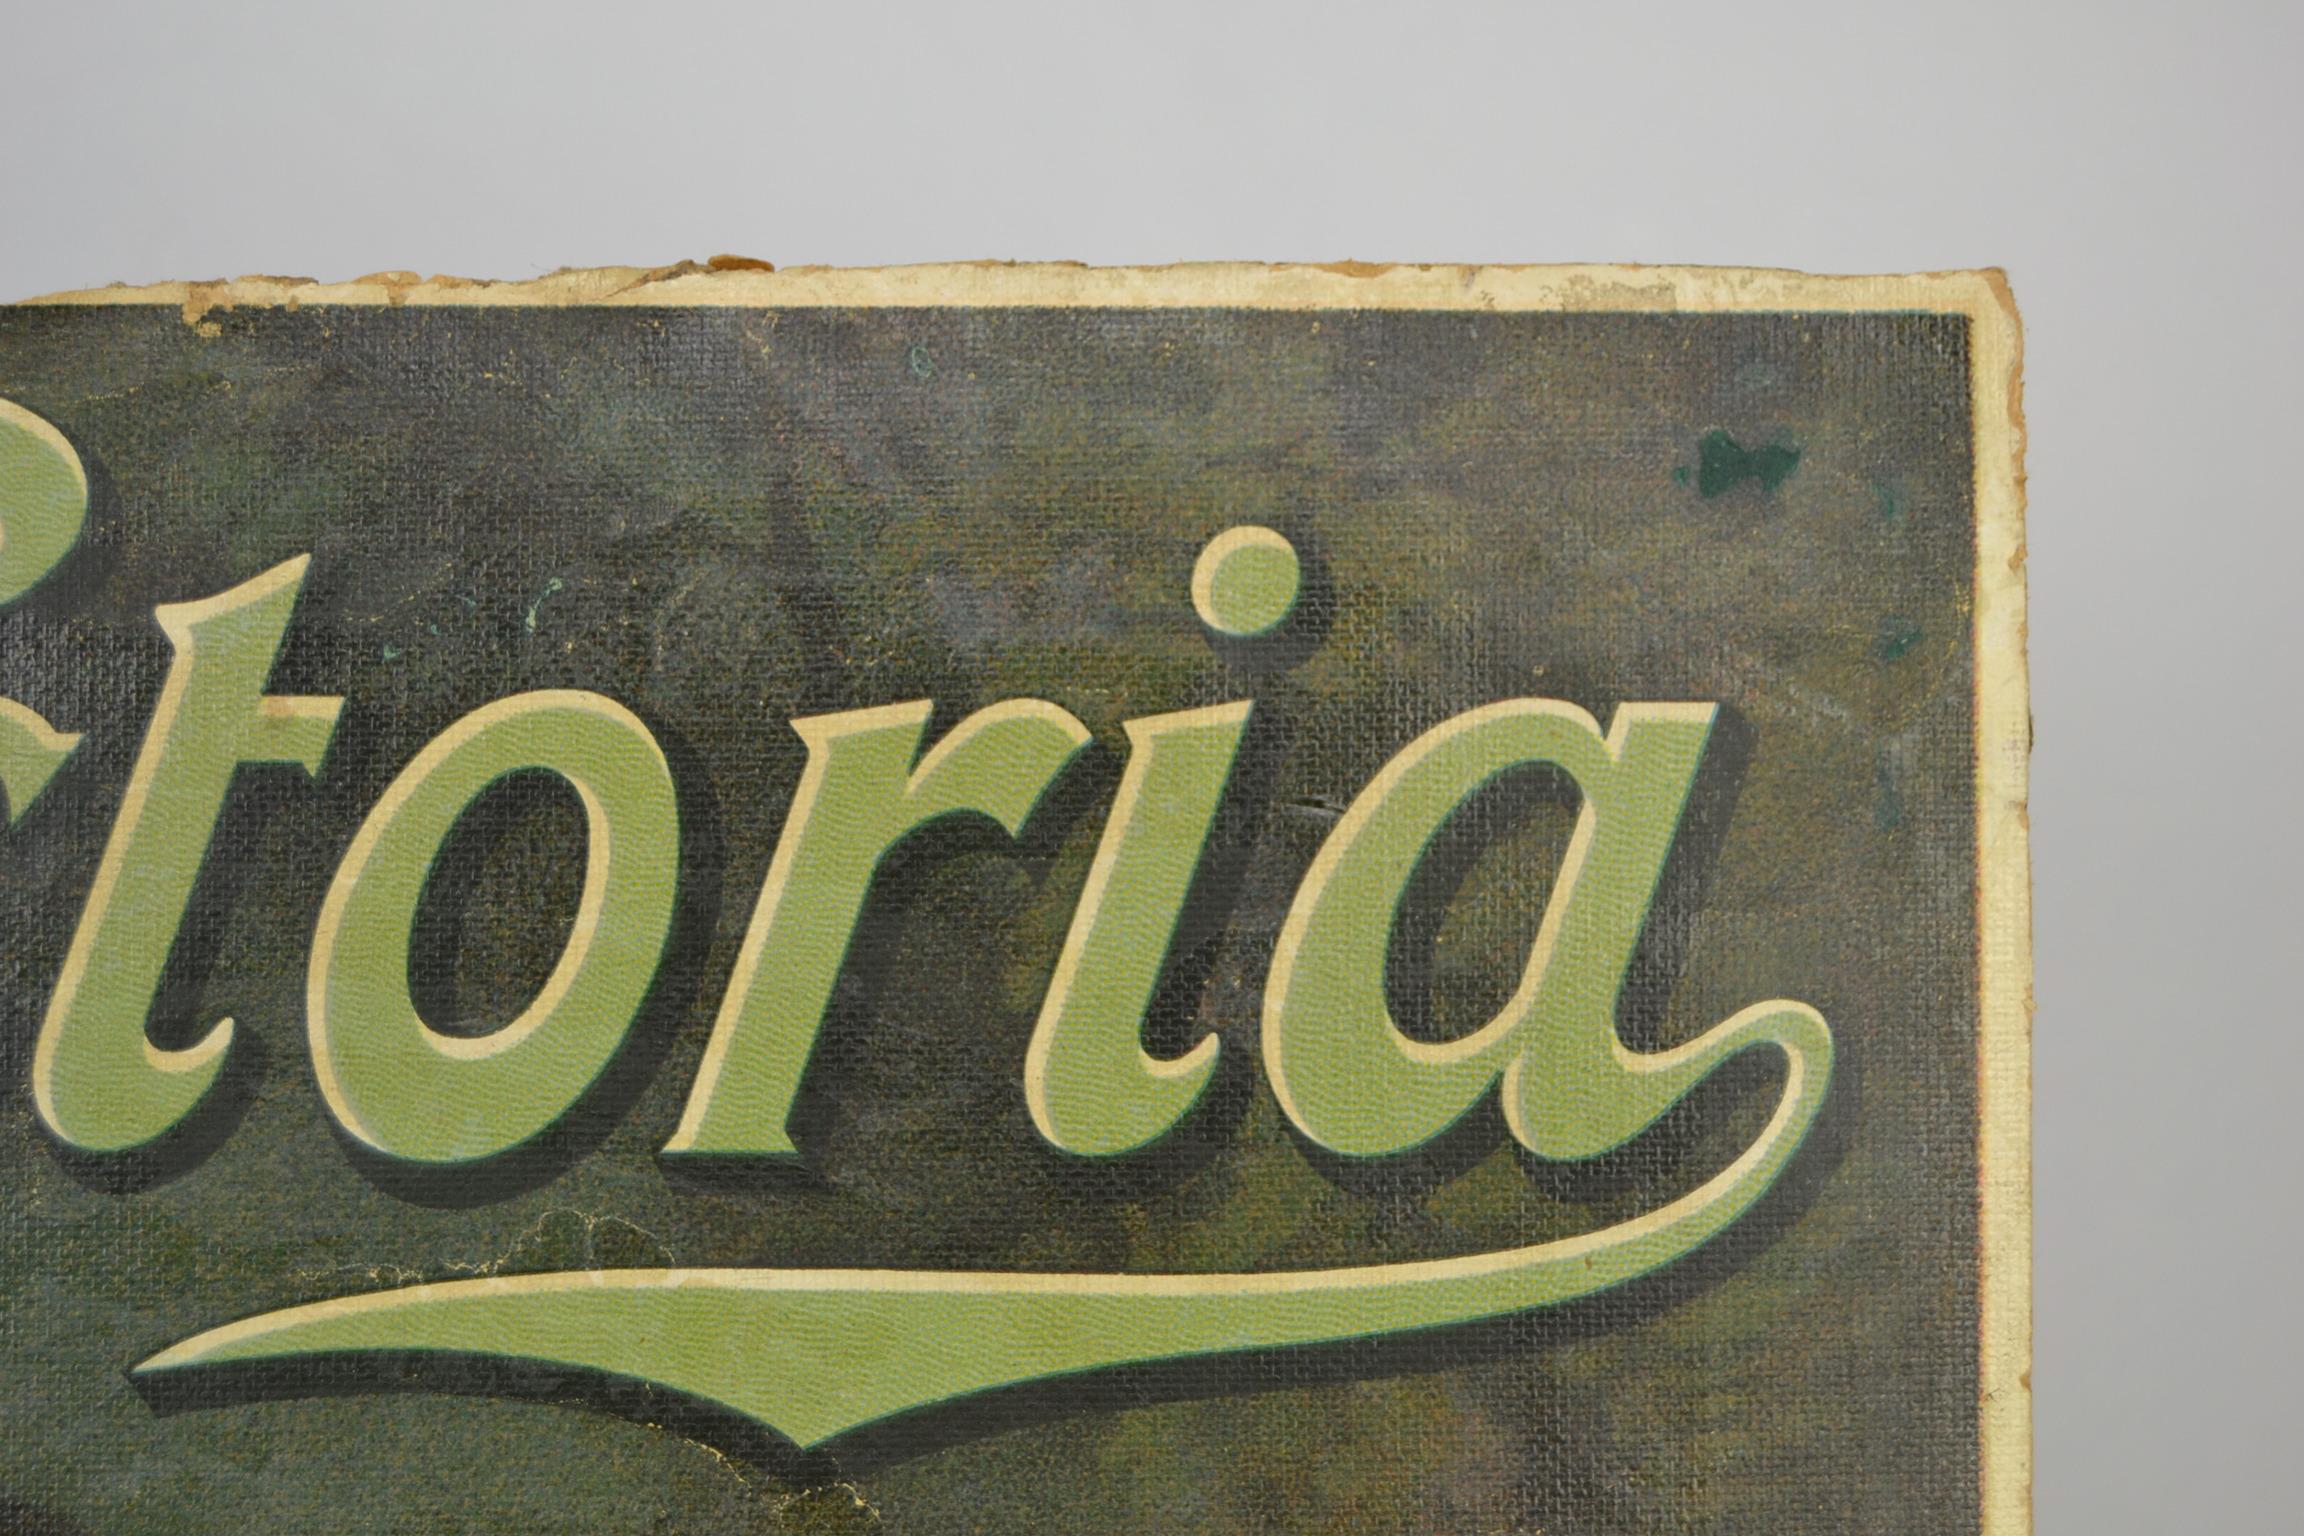 Antique Chromo Advertising Sign for Victoria Chocolate and Cacao, Belgium 5